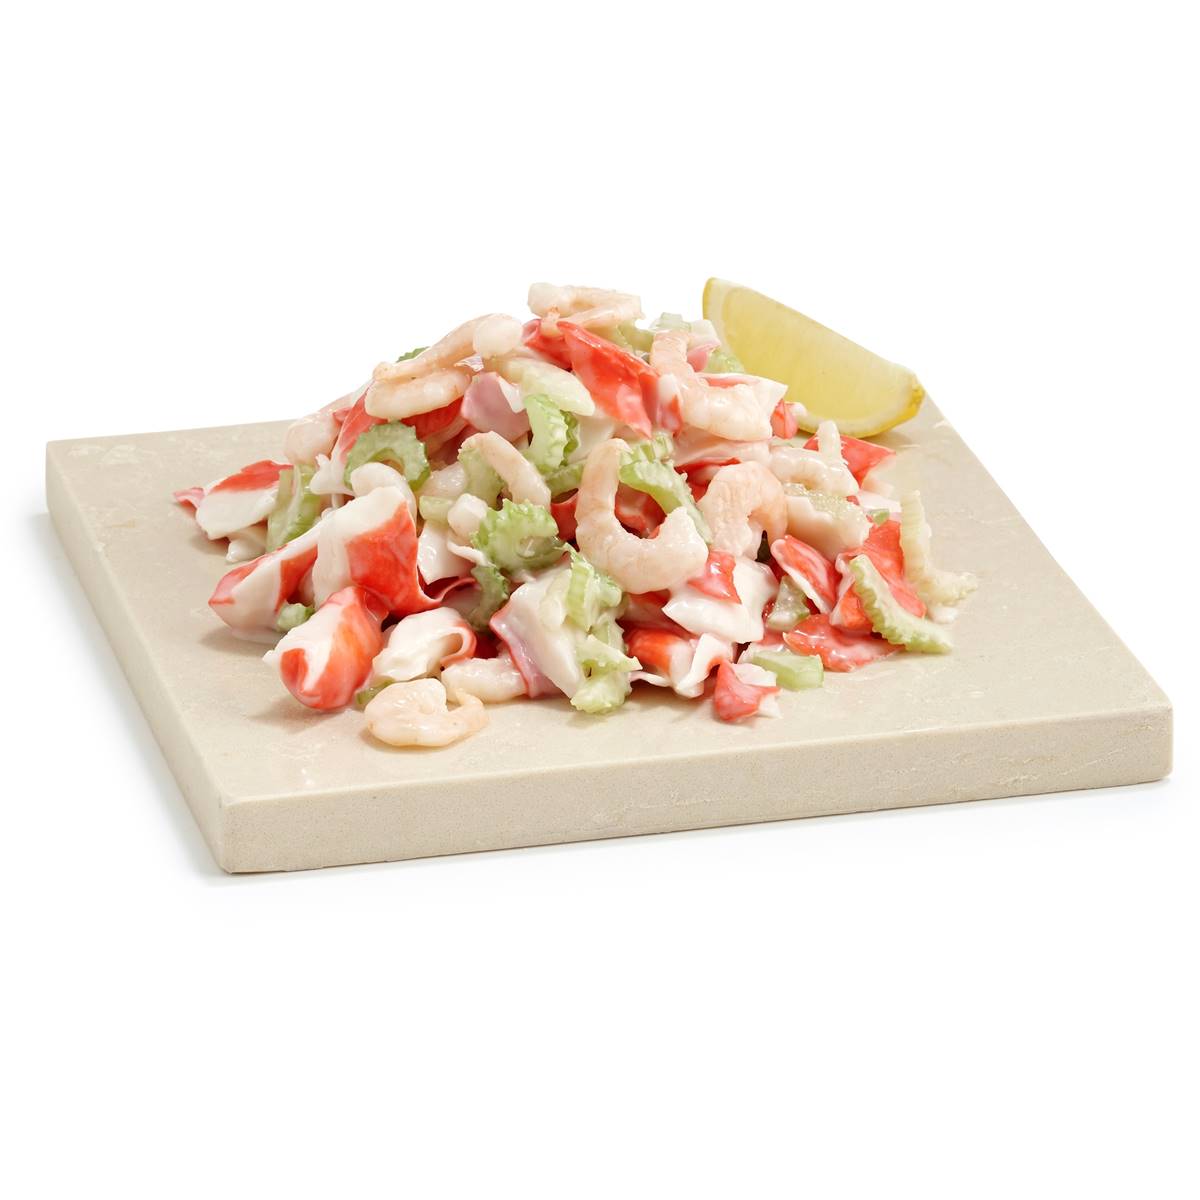 Calories in Gourmet Seafood Salad Chilled Premium Gourmet